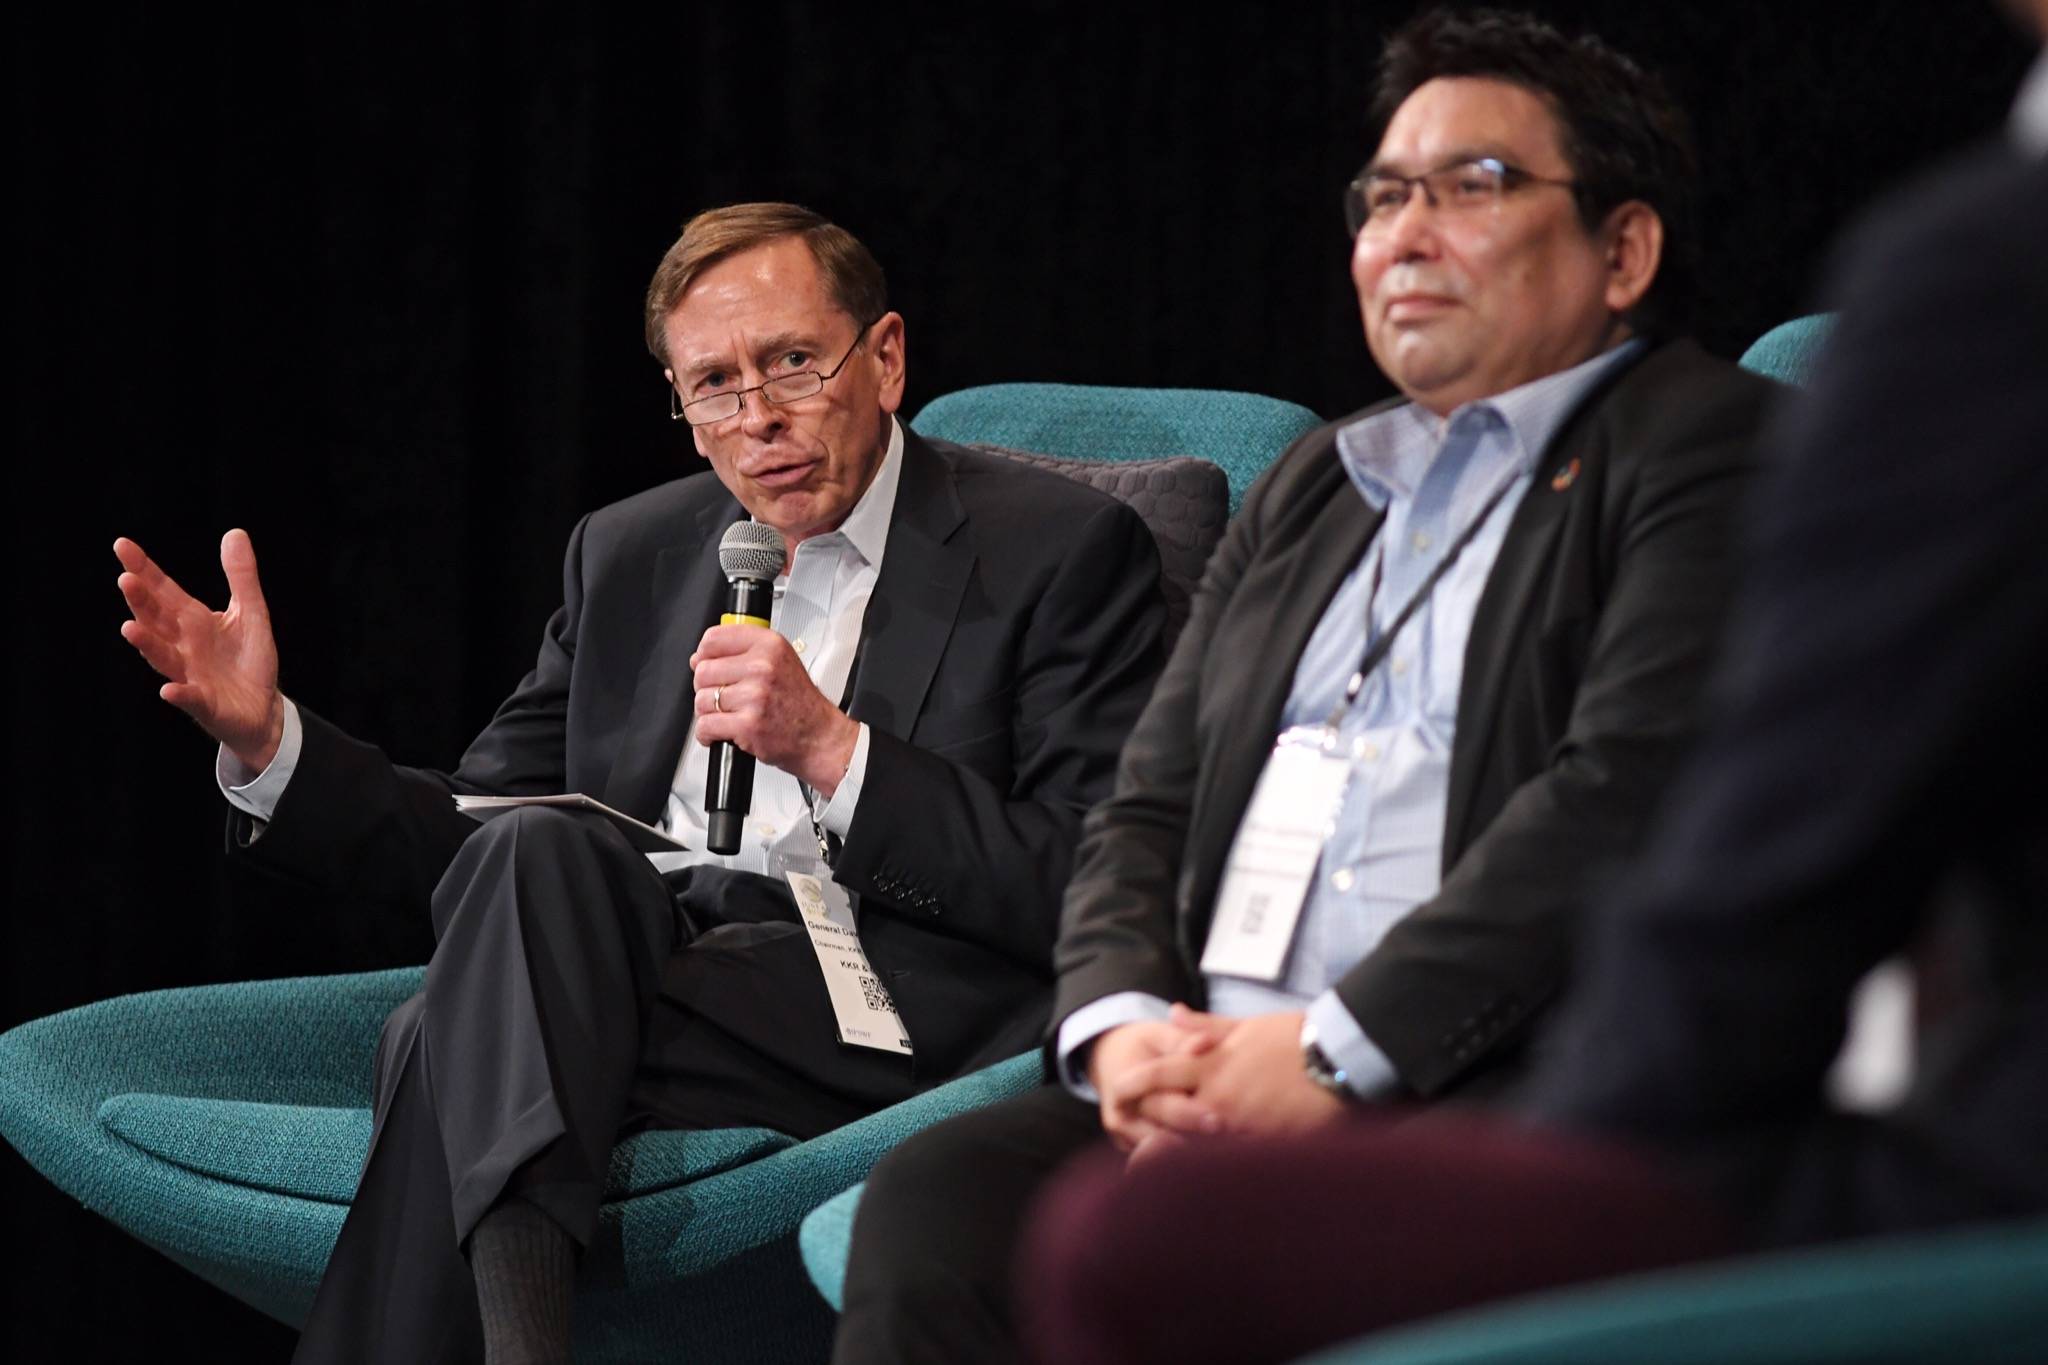 Empire Live: Former CIA Director David Petraeus part of panel on global Arctic interests